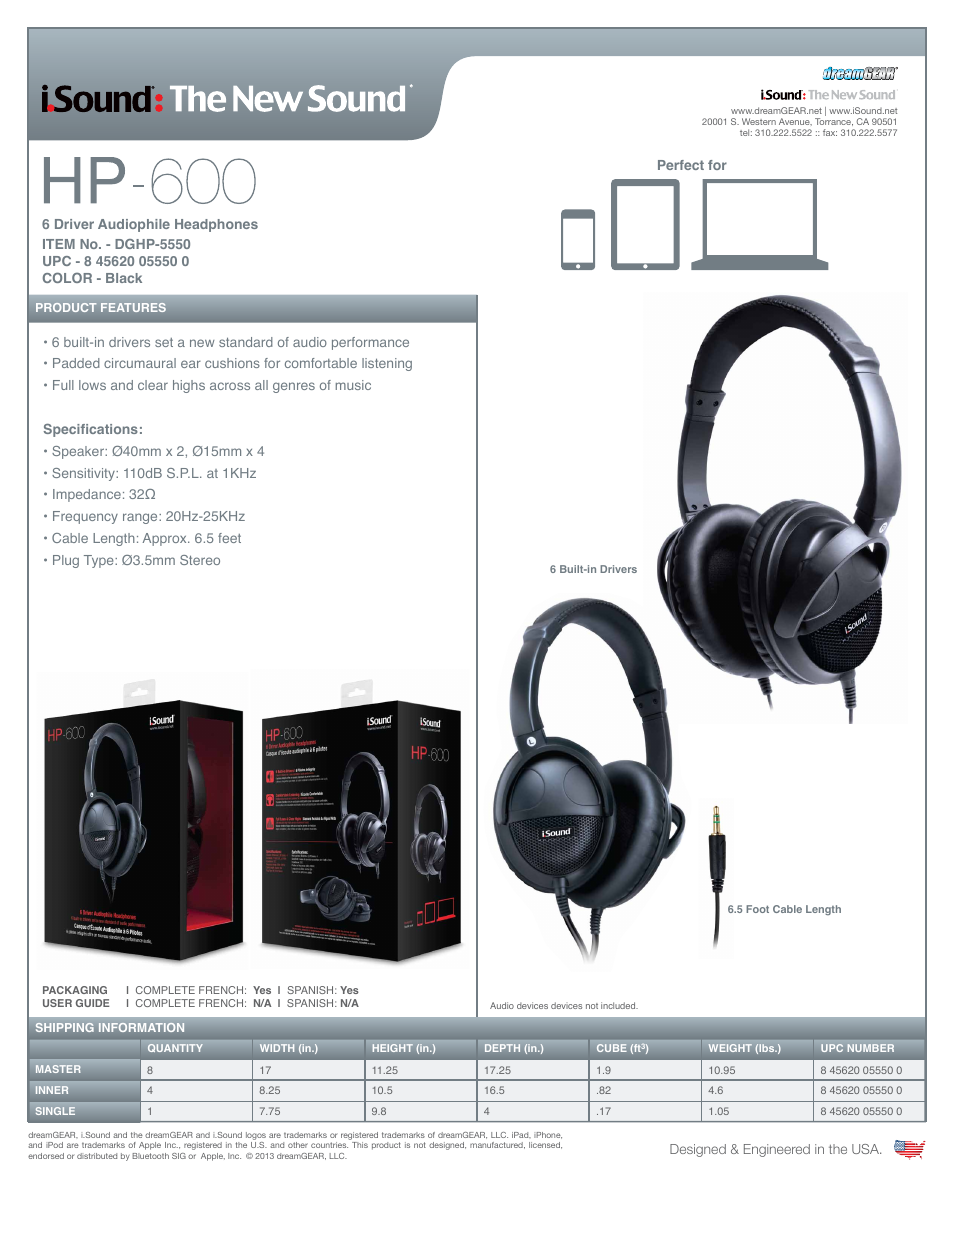 HP-600 6-driver Audiophile Headphones - Sell Sheet